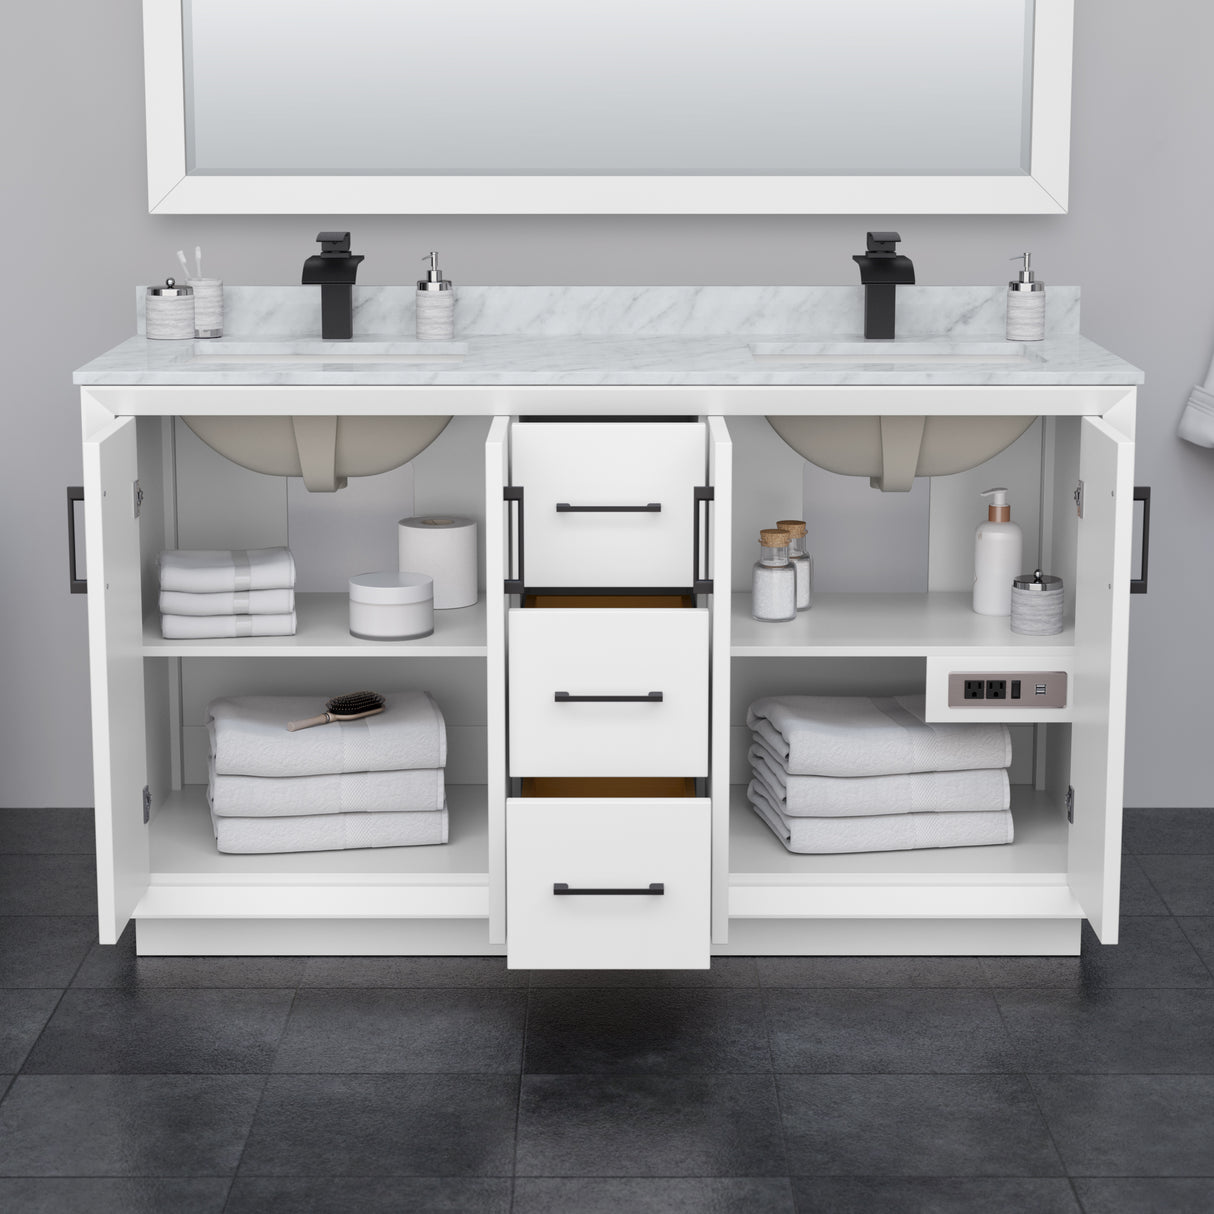 Strada 60 Inch Double Bathroom Vanity in White White Carrara Marble Countertop Undermount Square Sink Brushed Nickel Trim 58 Inch Mirror